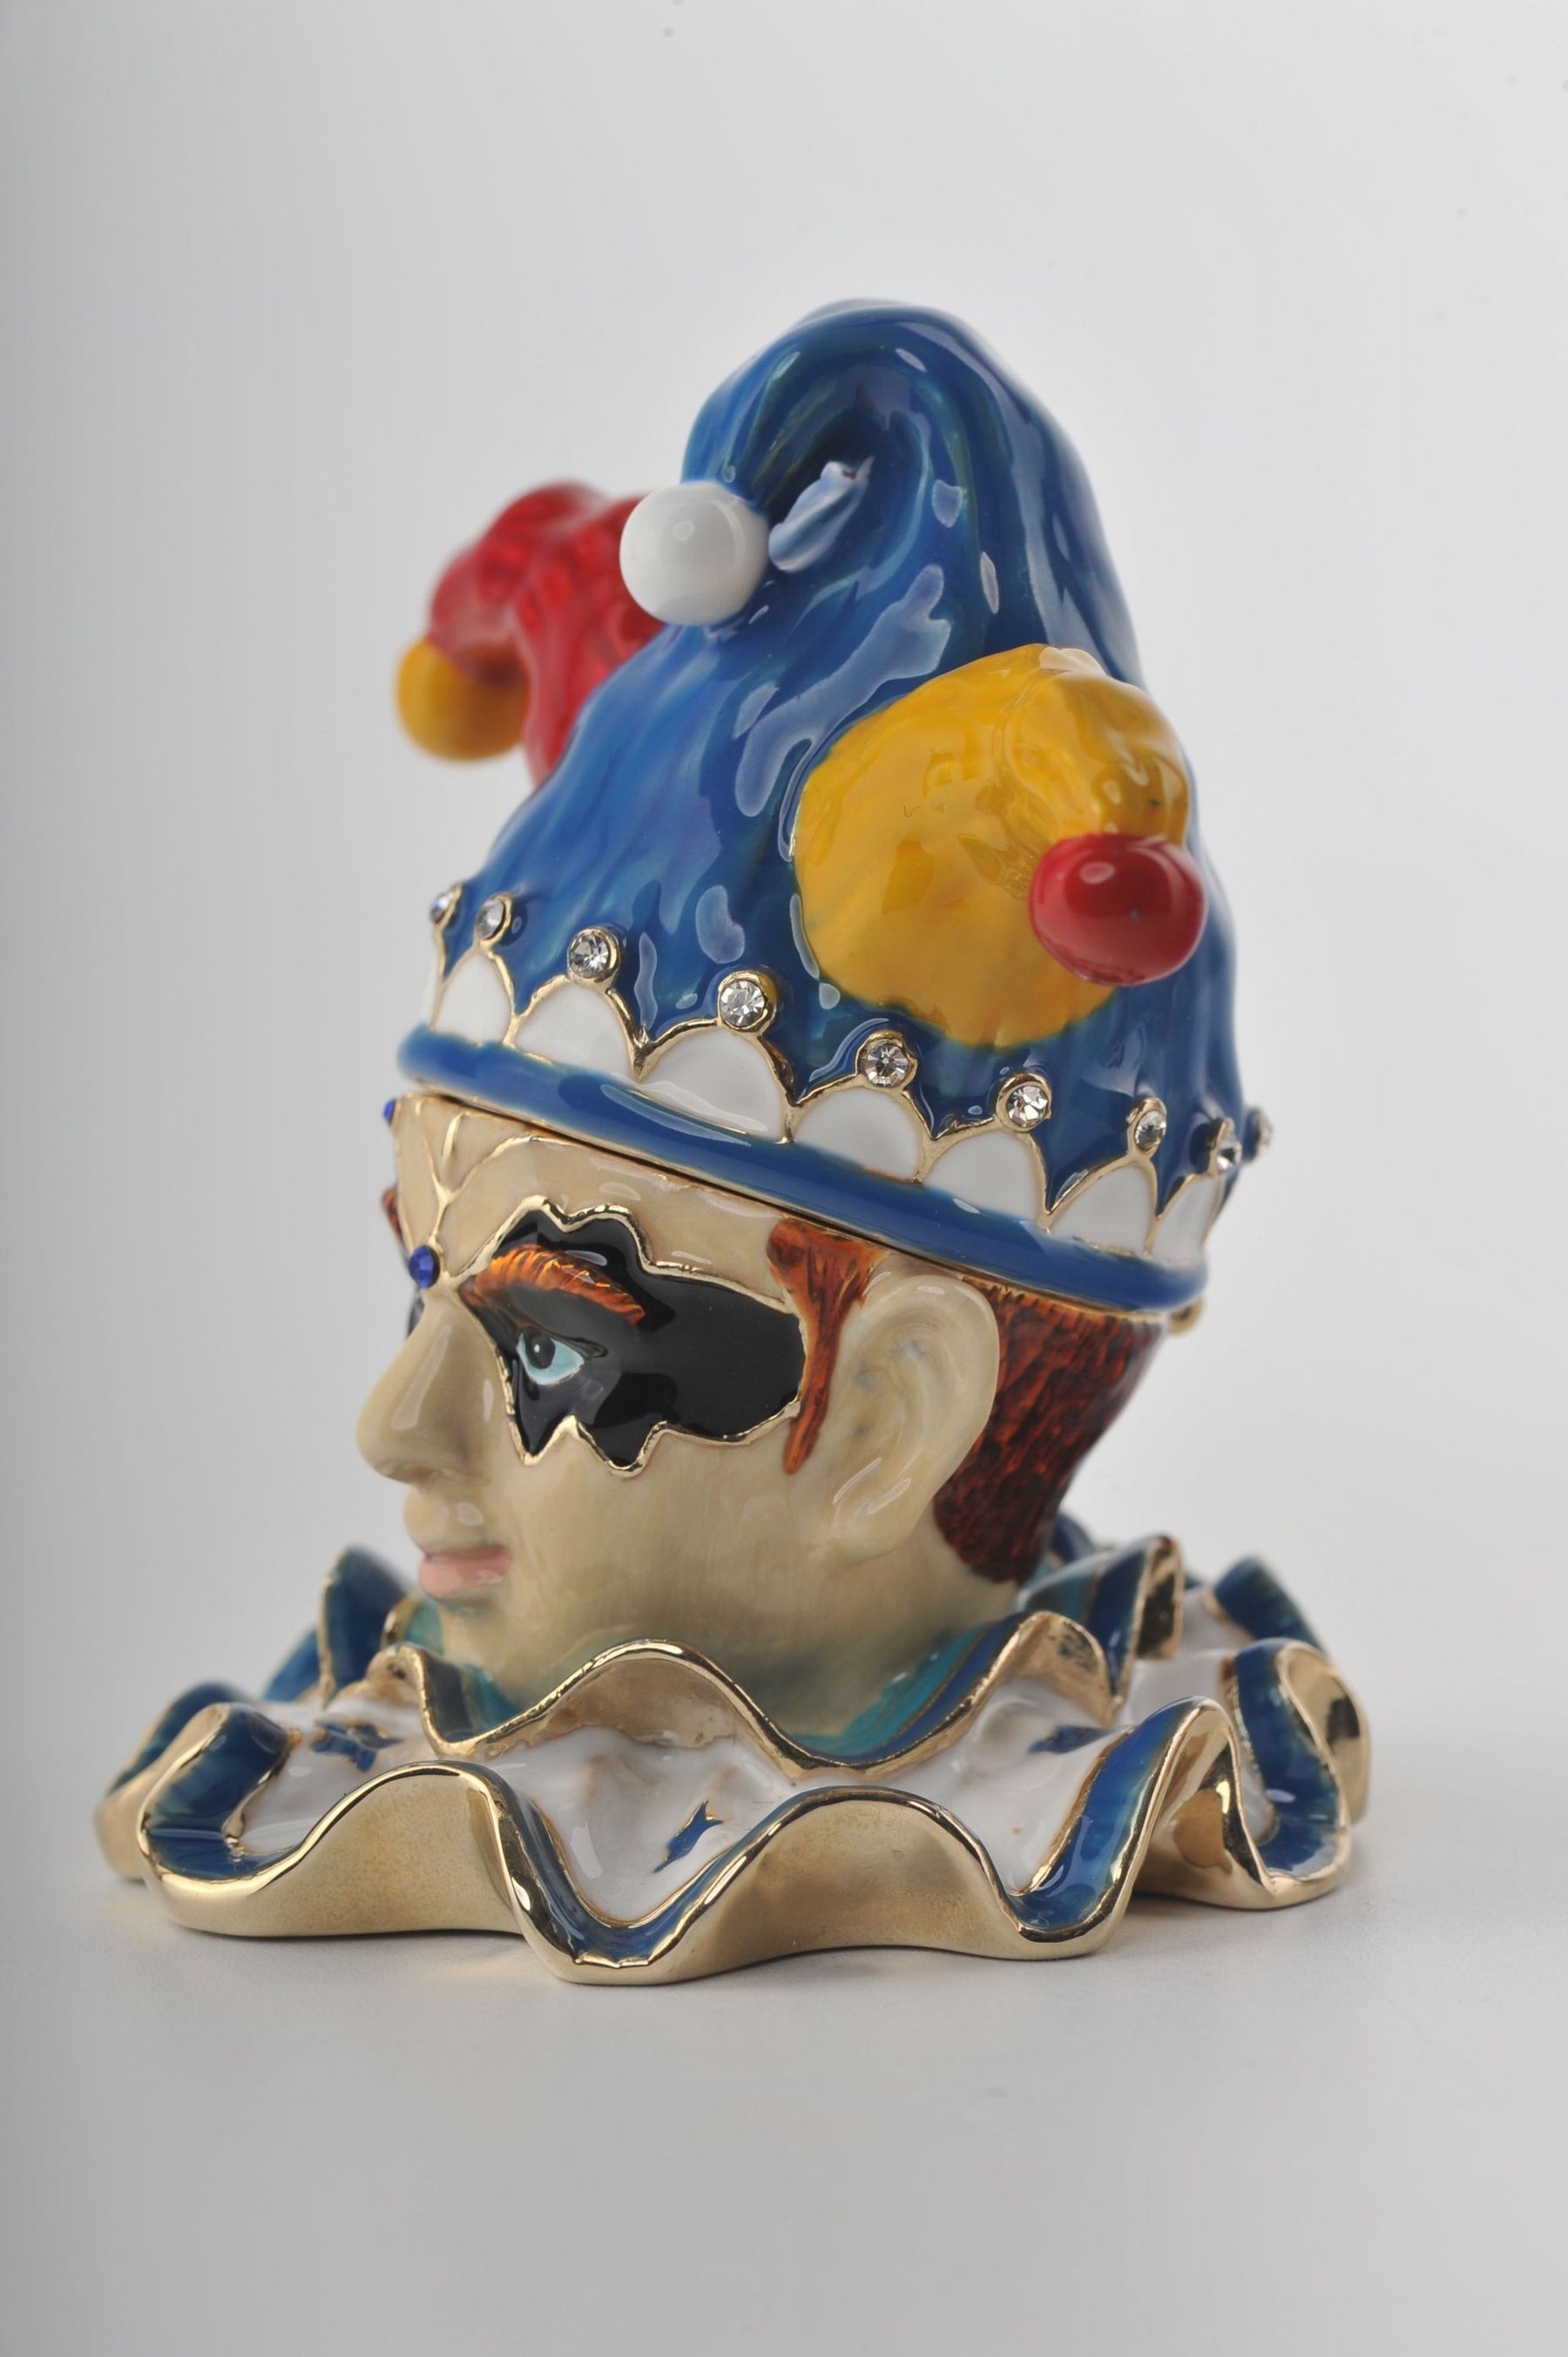 Keren Kopal Decorated Clown Head  65.50